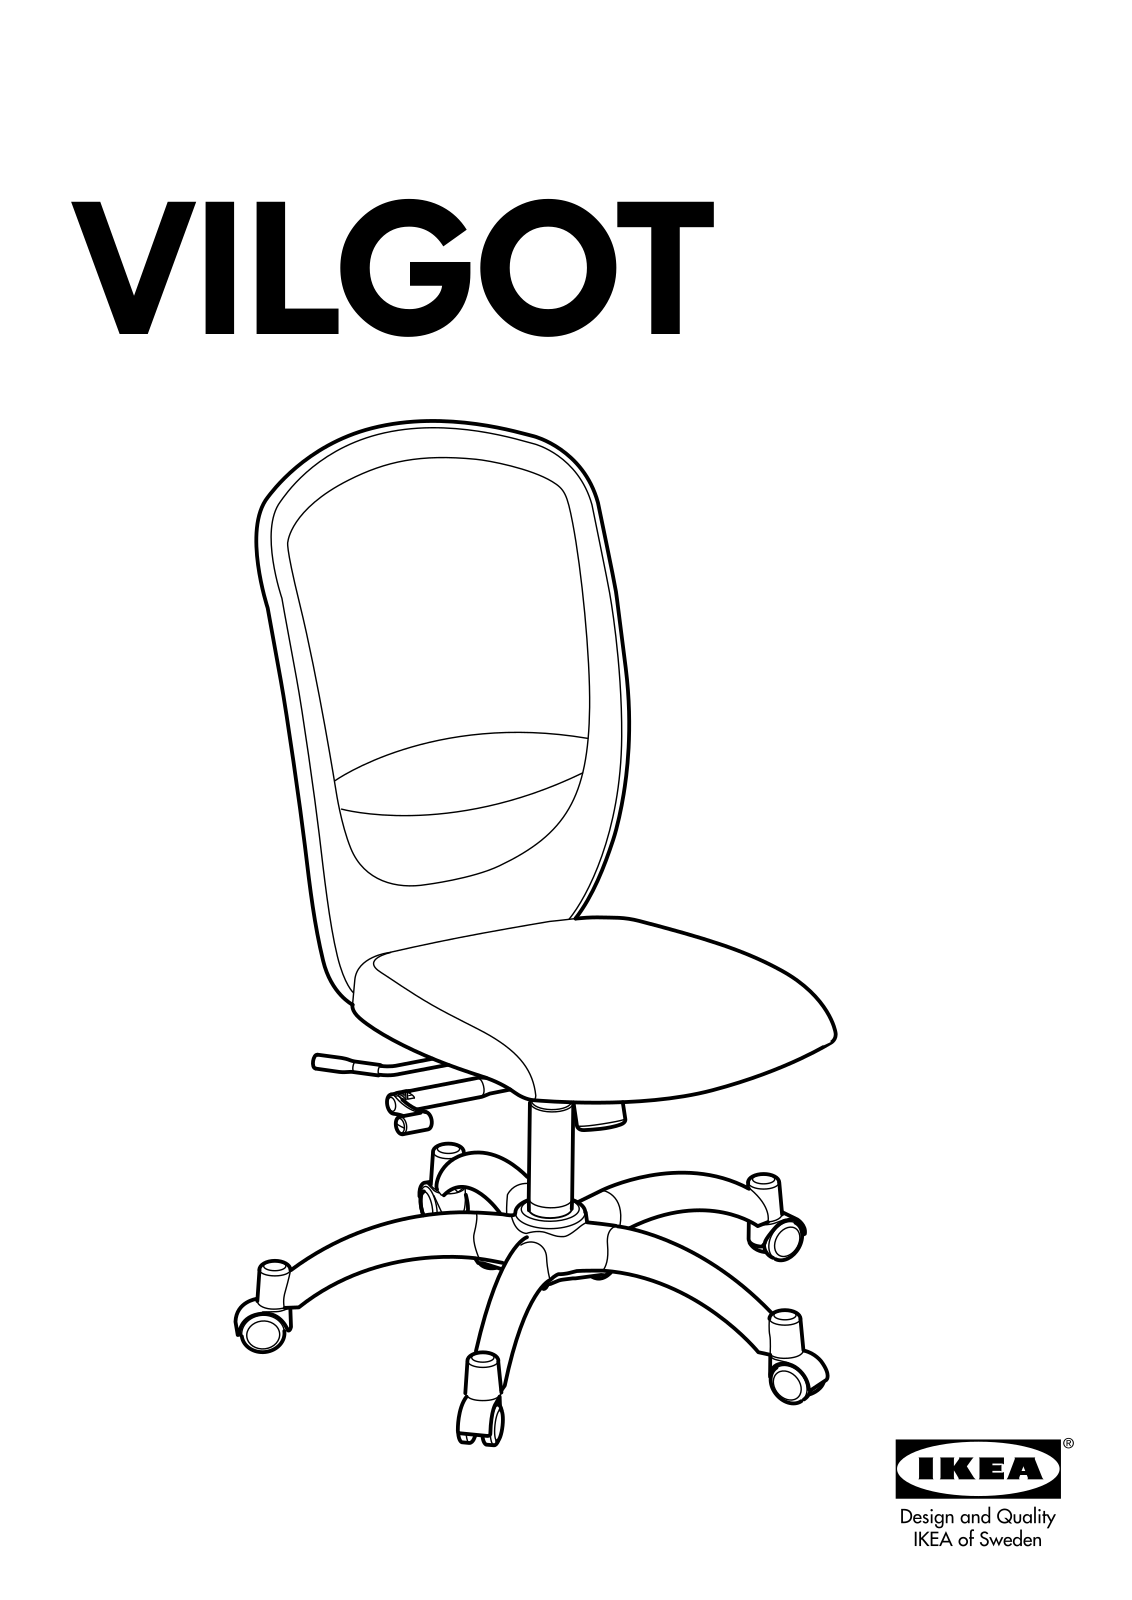 IKEA VILGOT User Manual